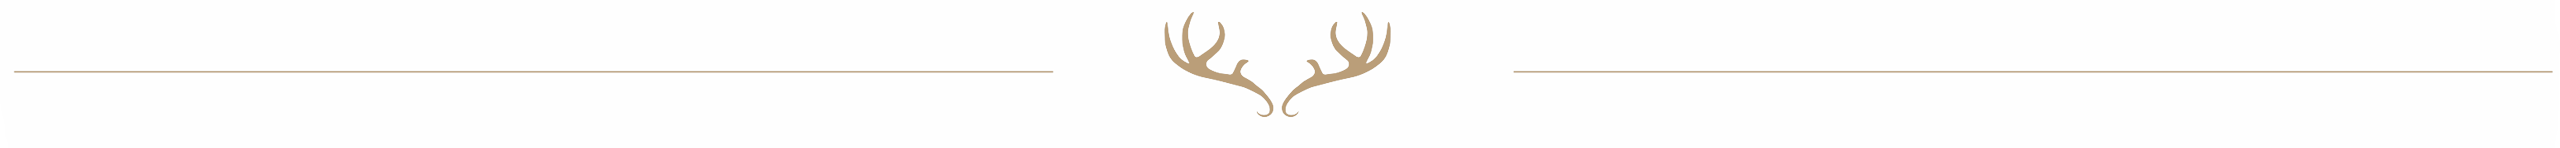 guided elk hunting trips in wyoming